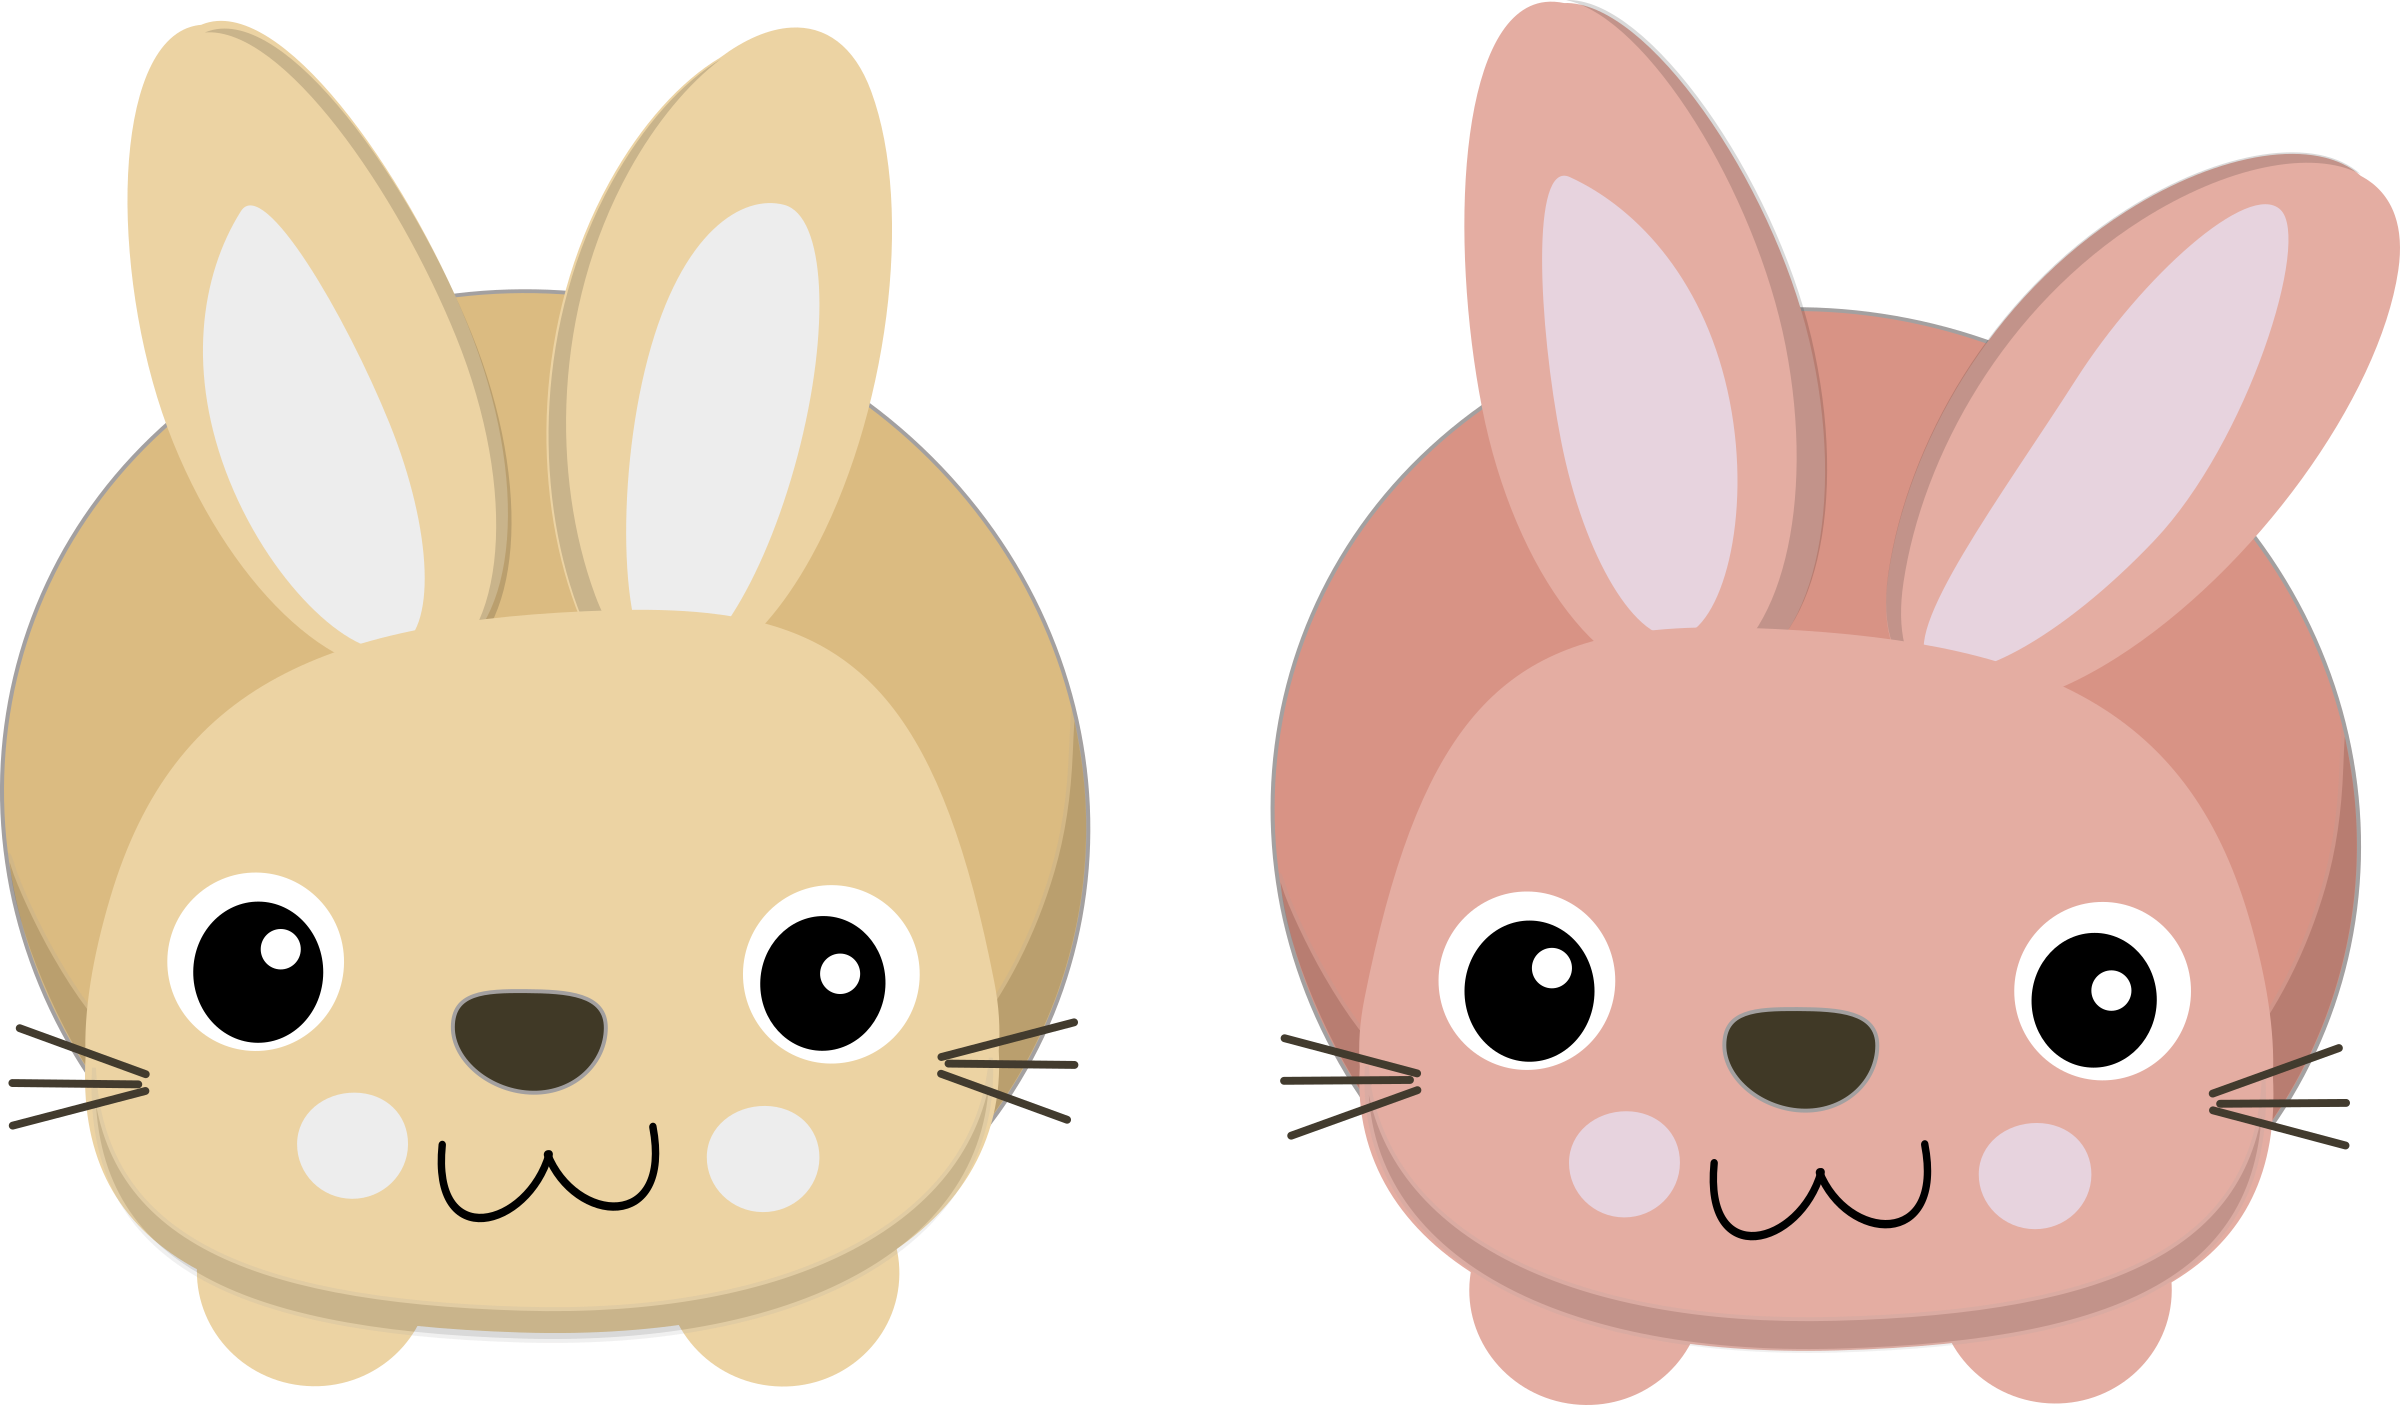 Cute bunnies by anarres